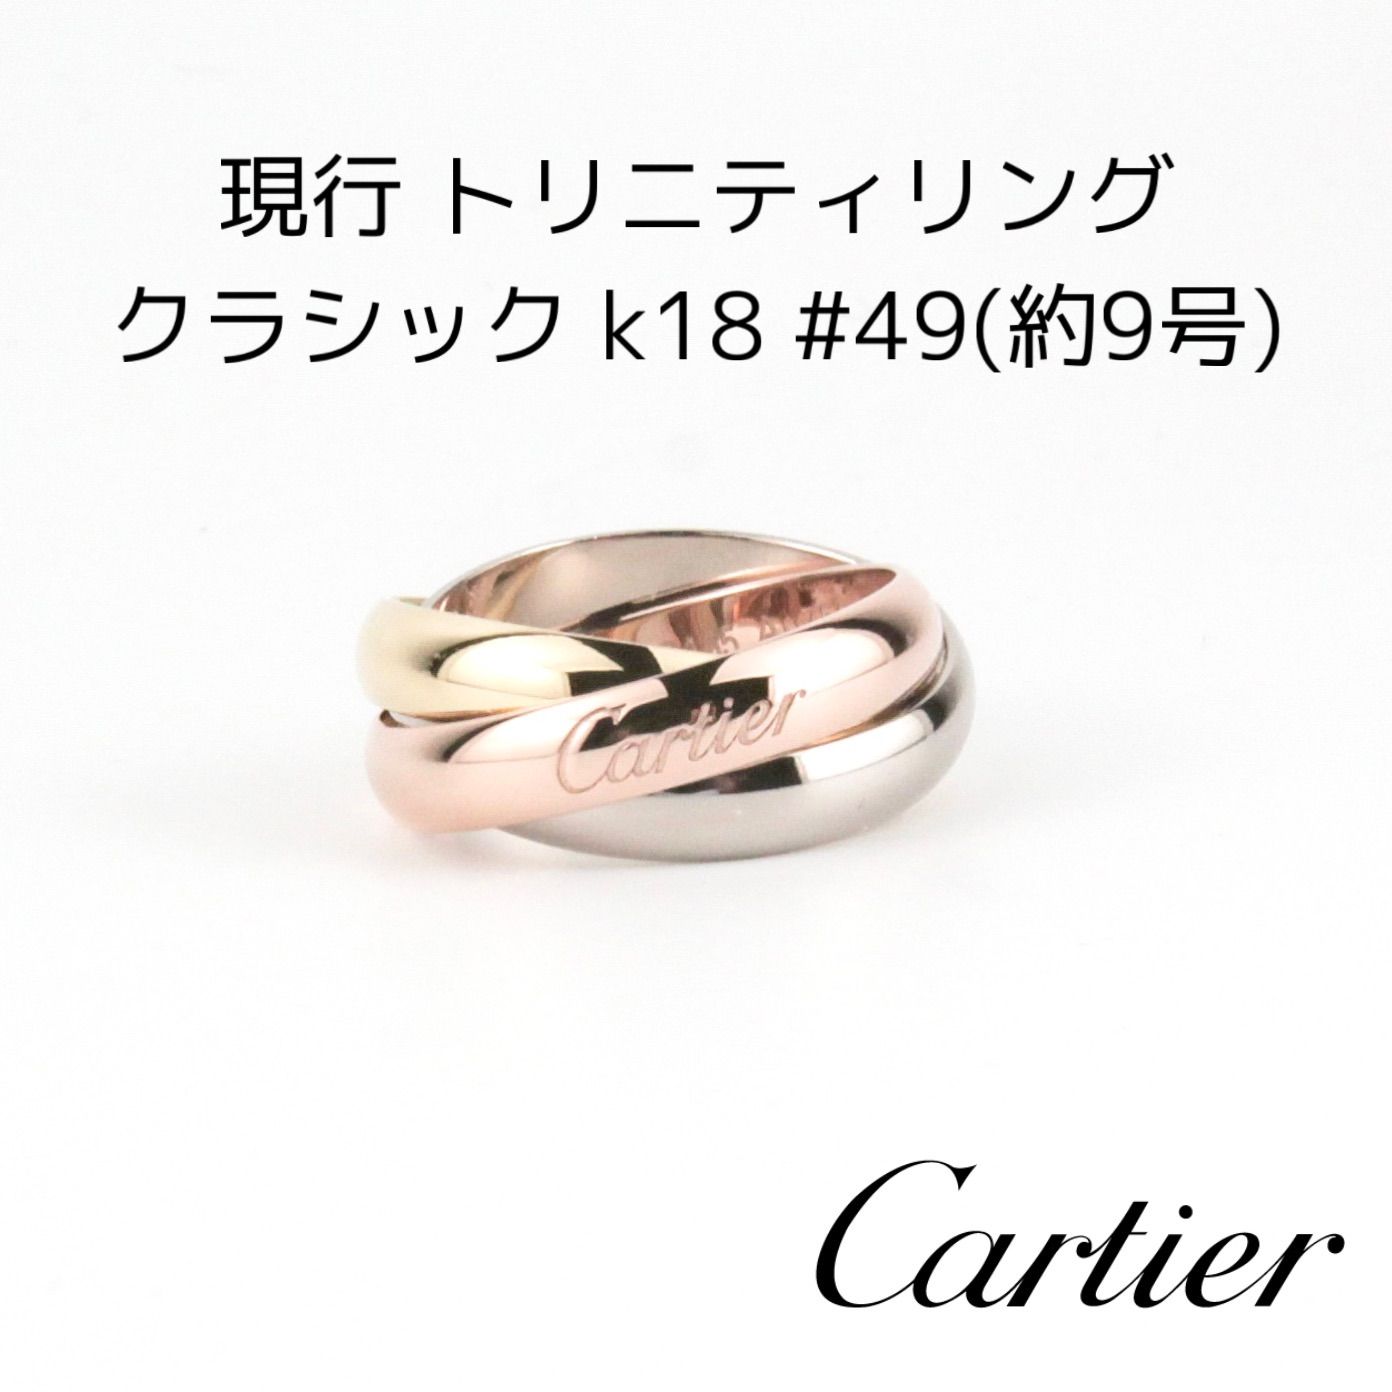 Cartier カルティエ 現行 トリニティ リング k18 約9号